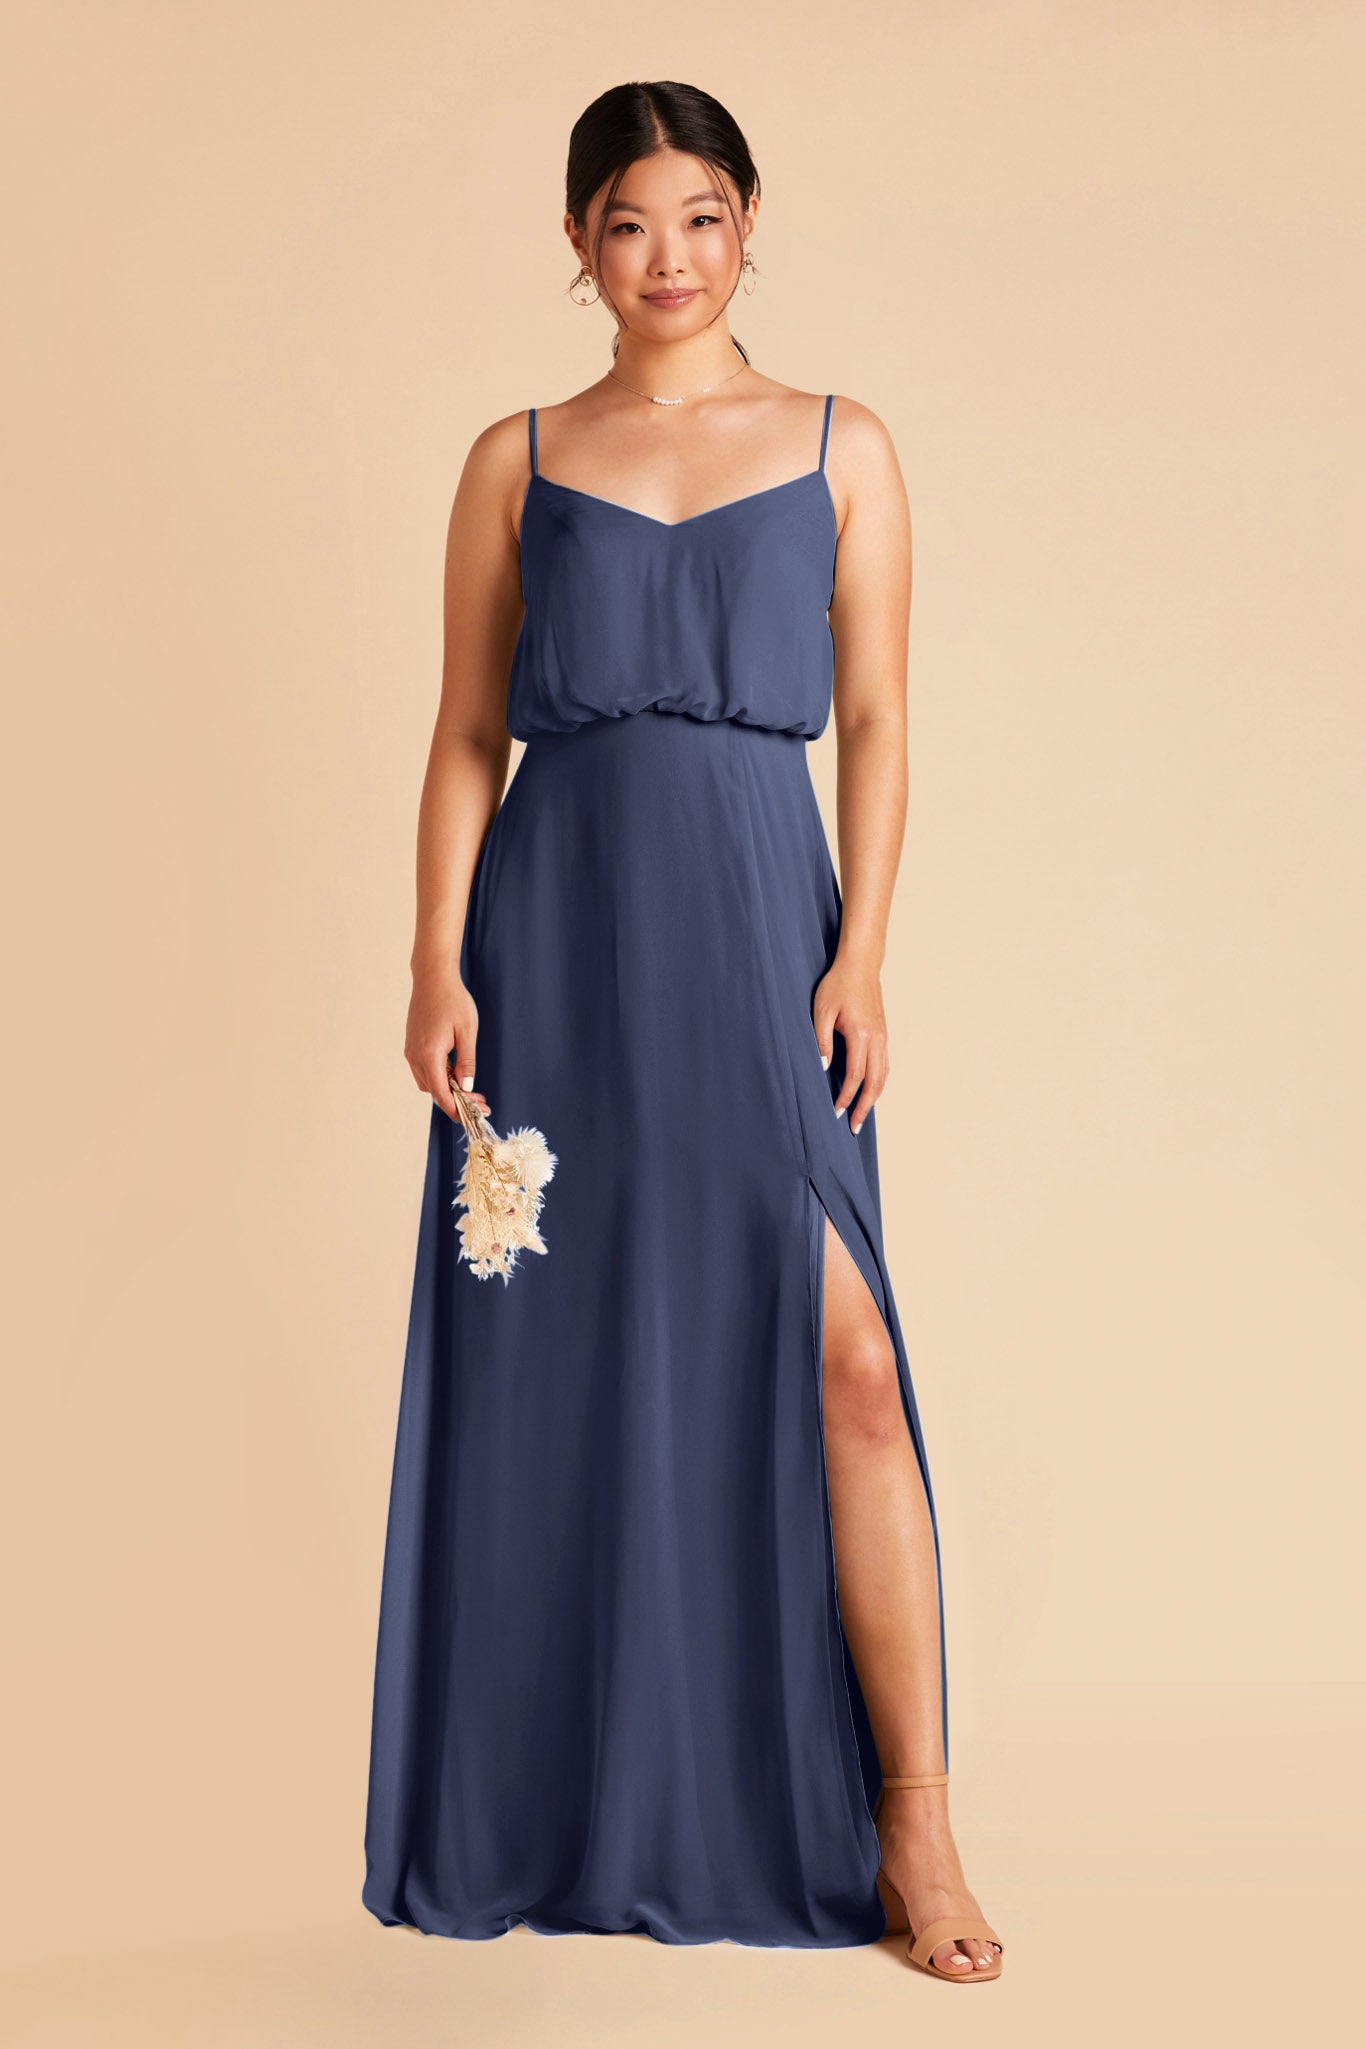 Slate Blue Gwennie Dress by Birdy Grey